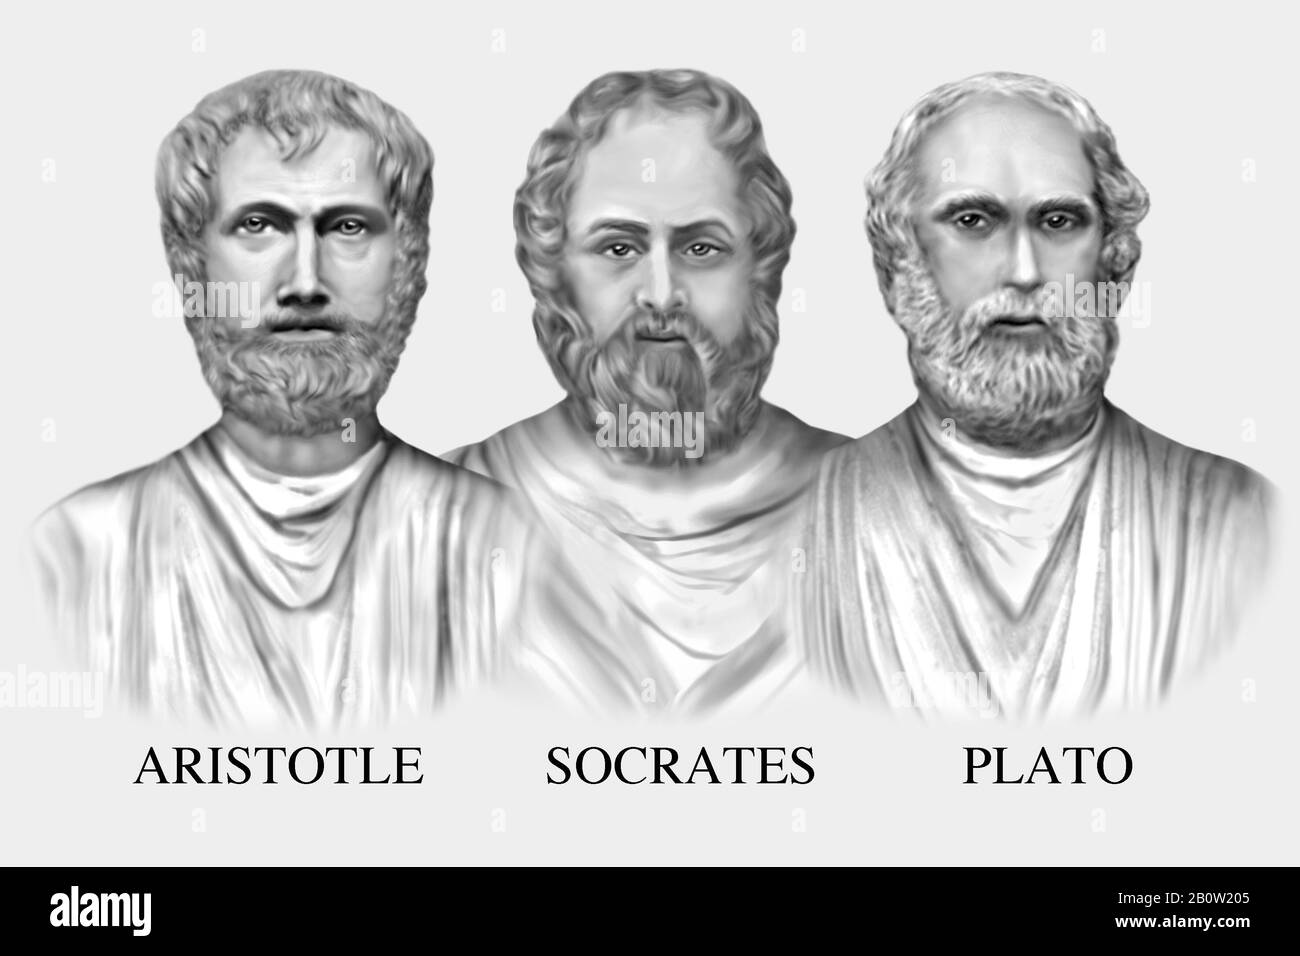 Socrates Plato Aristotle Timeline